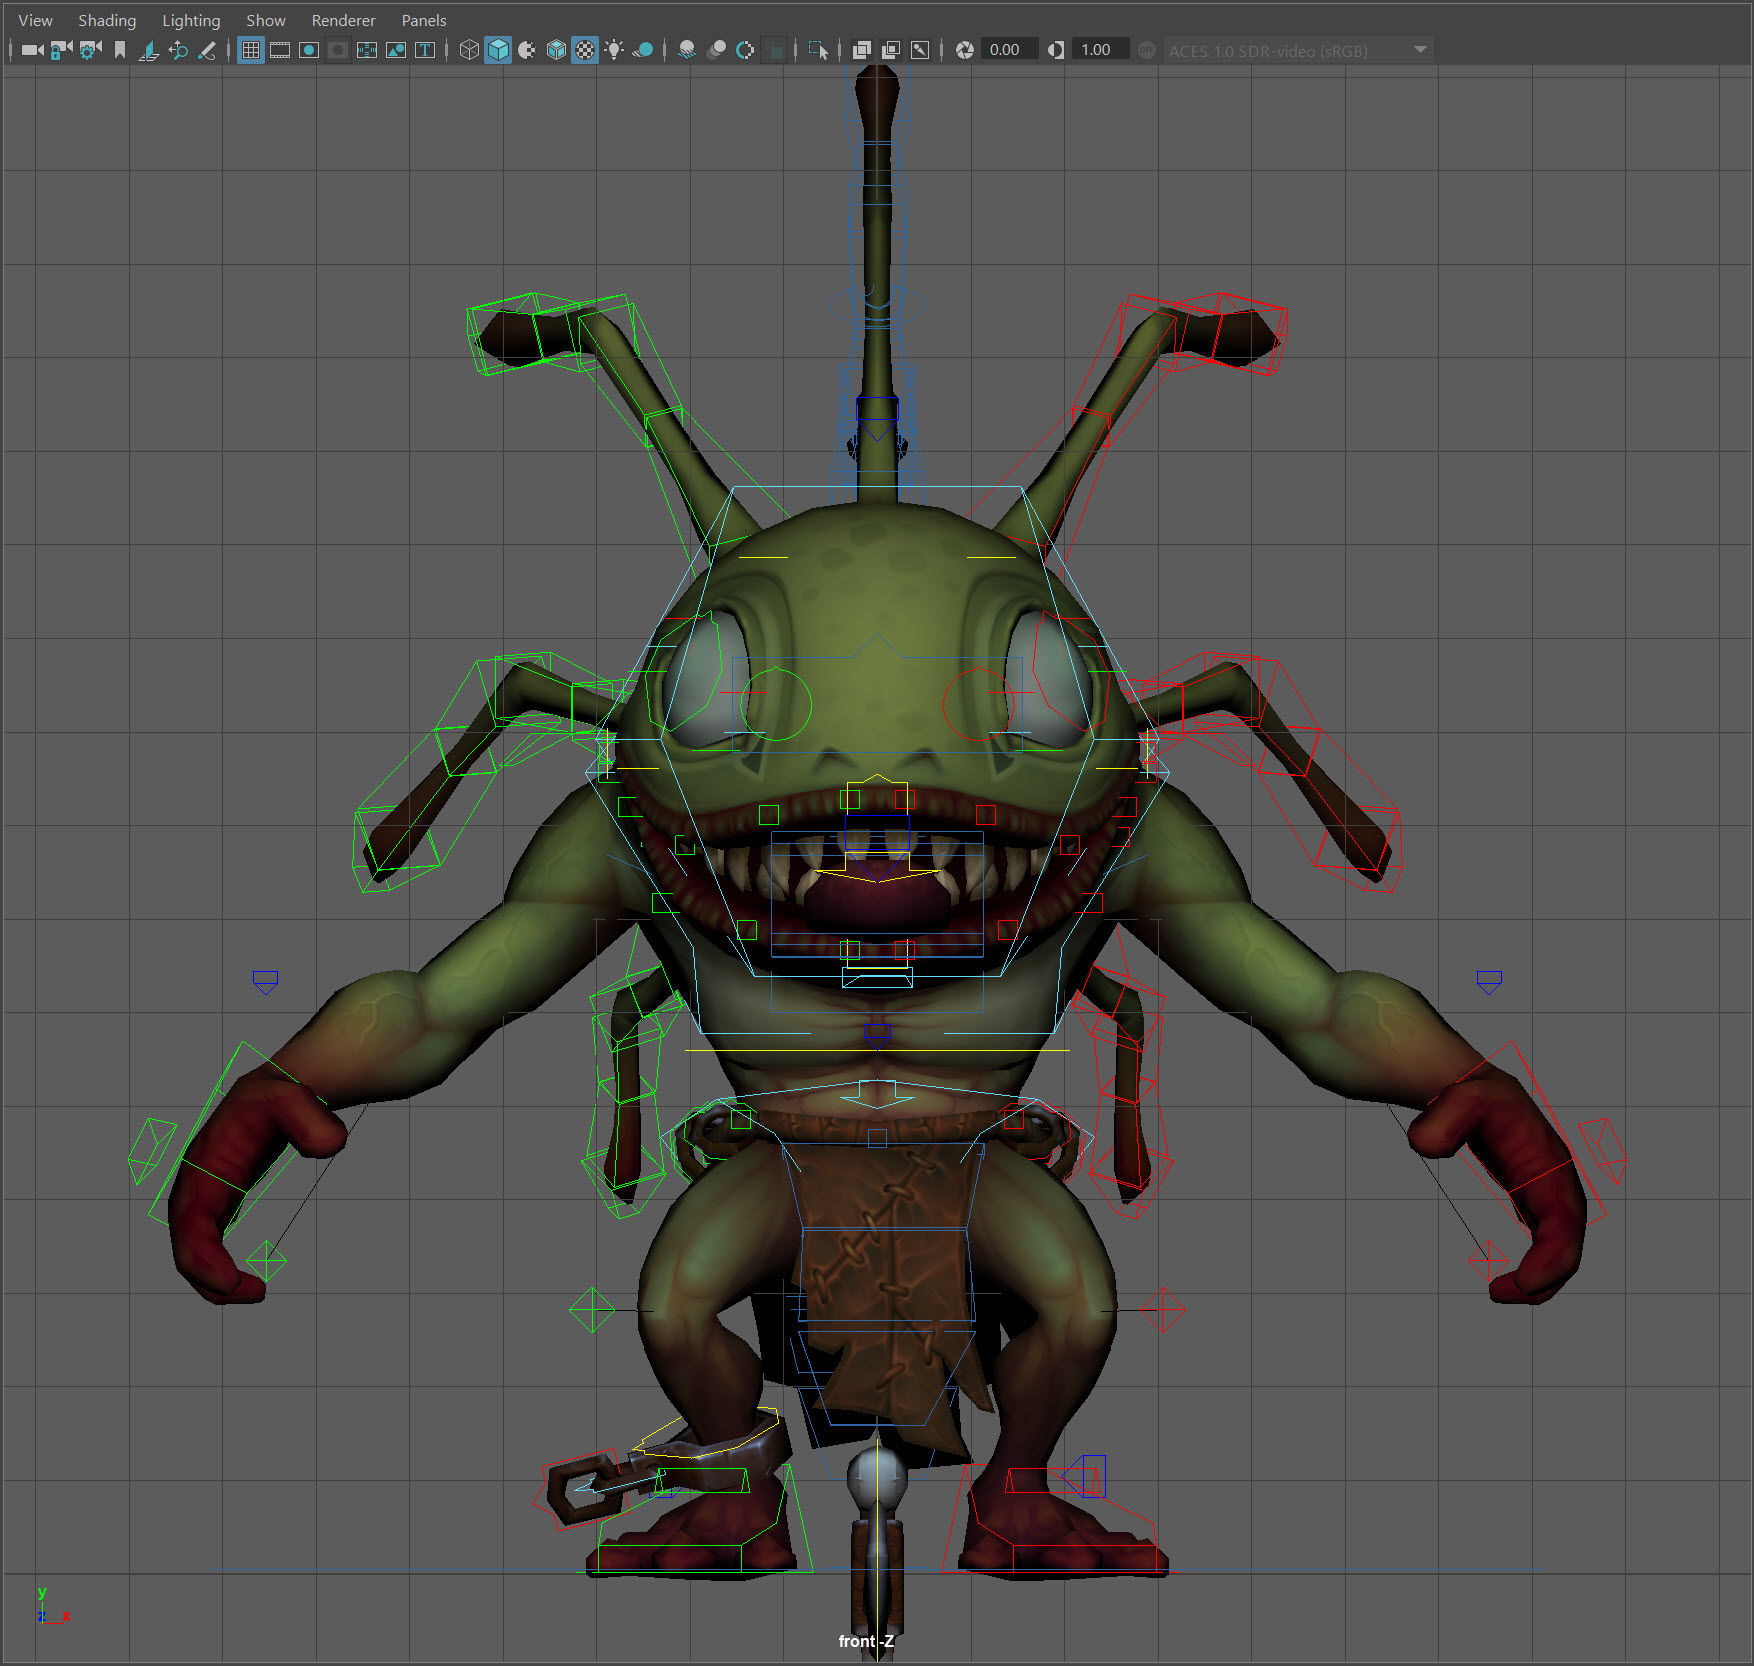 Murloc strange creature rig with textures莫洛克奇怪的生物绑定模型，有纹理插图3